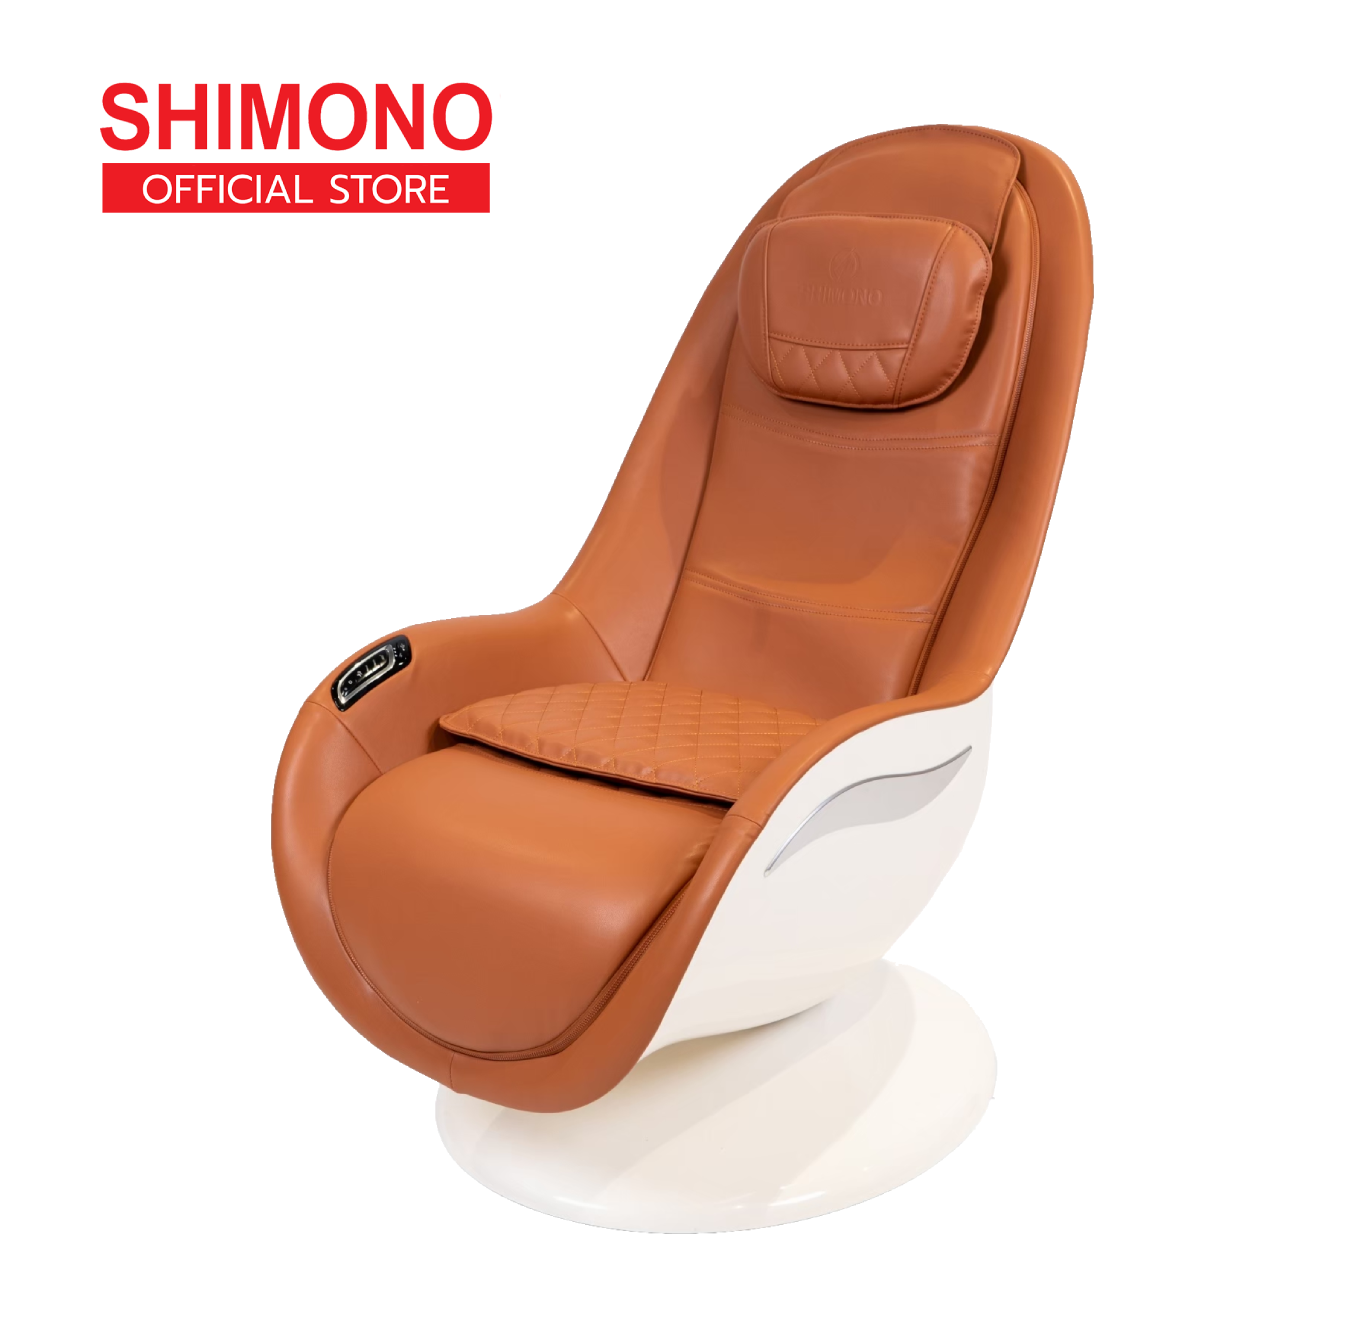 Shimono  ICuddle OGI-2222D massage chair